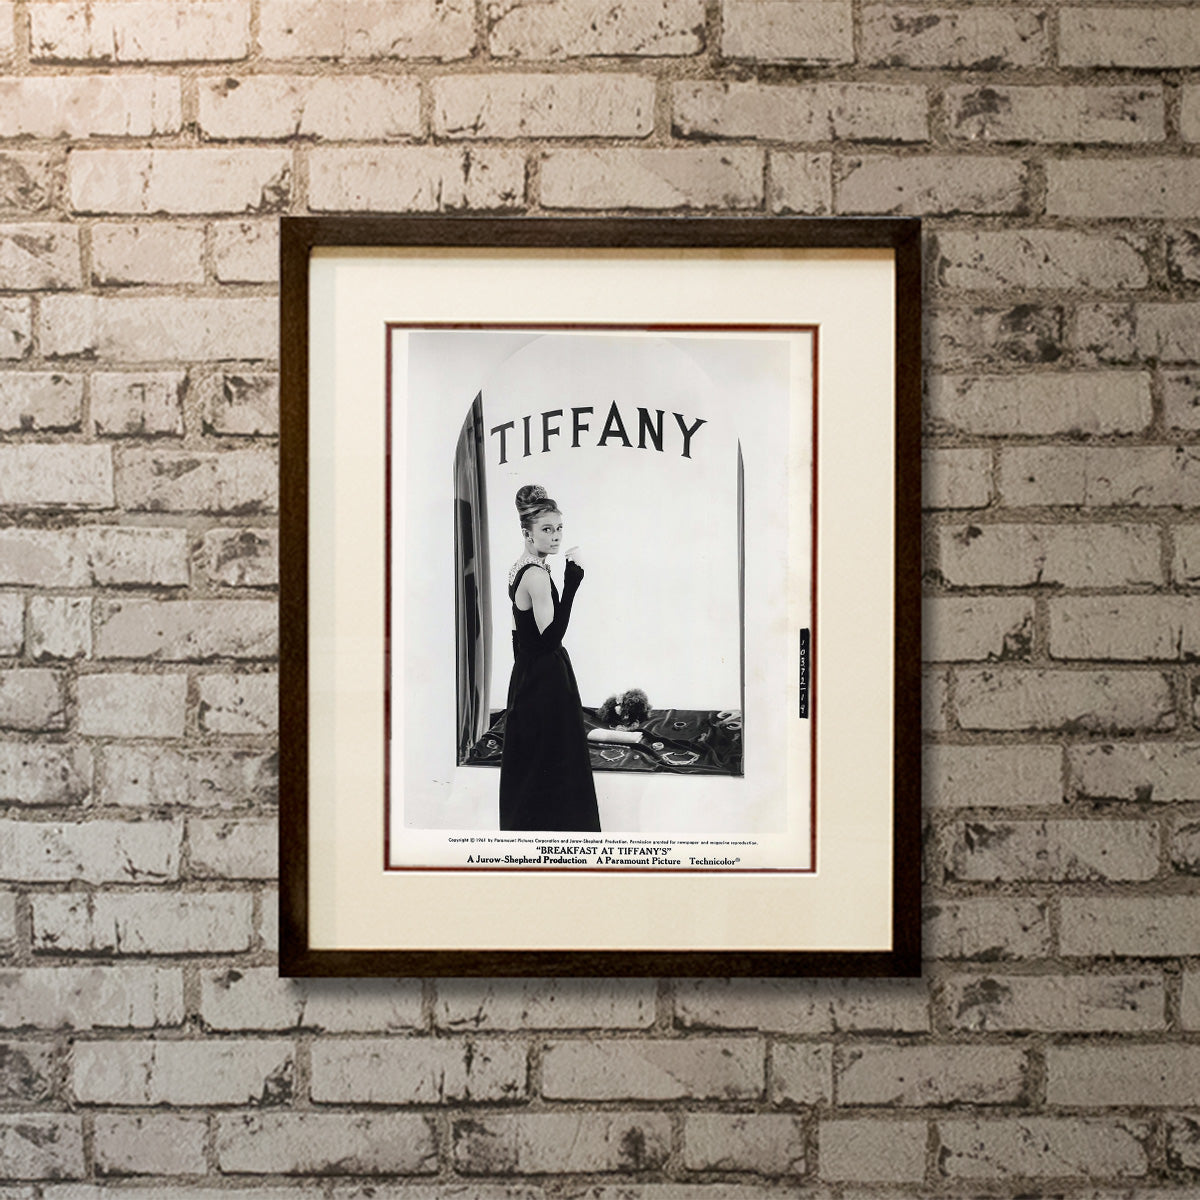 Audrey Hepburn - Breakfast at Tiffany's Portrait (1961)